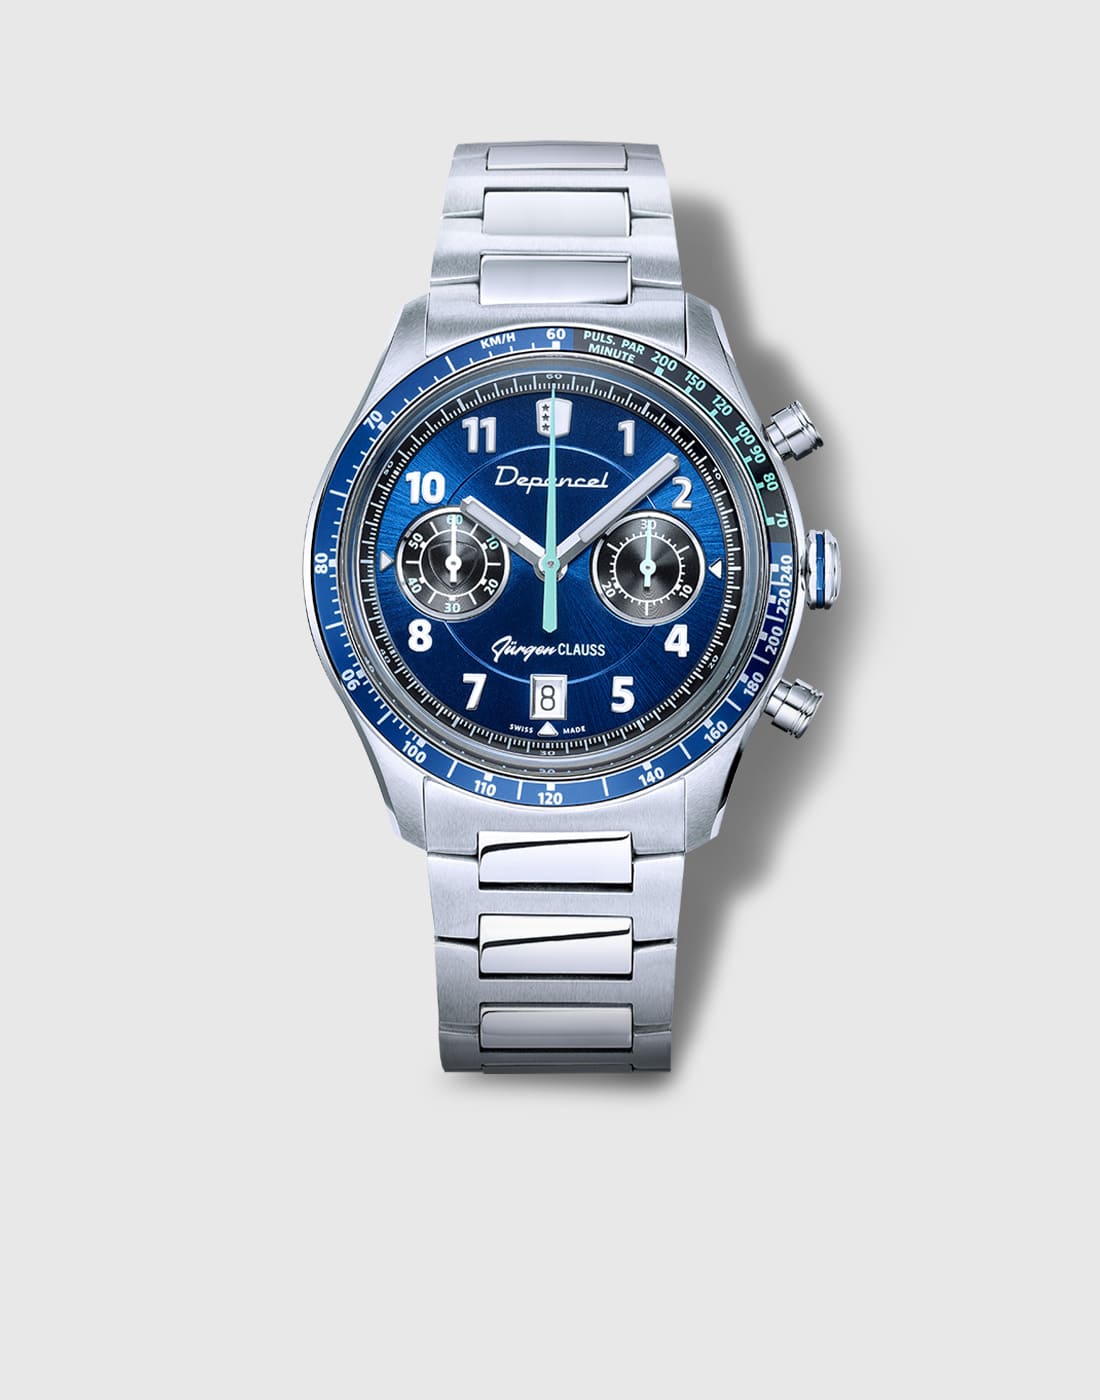 Depancel Allure jurgen clauss chronograph automatic watch for men